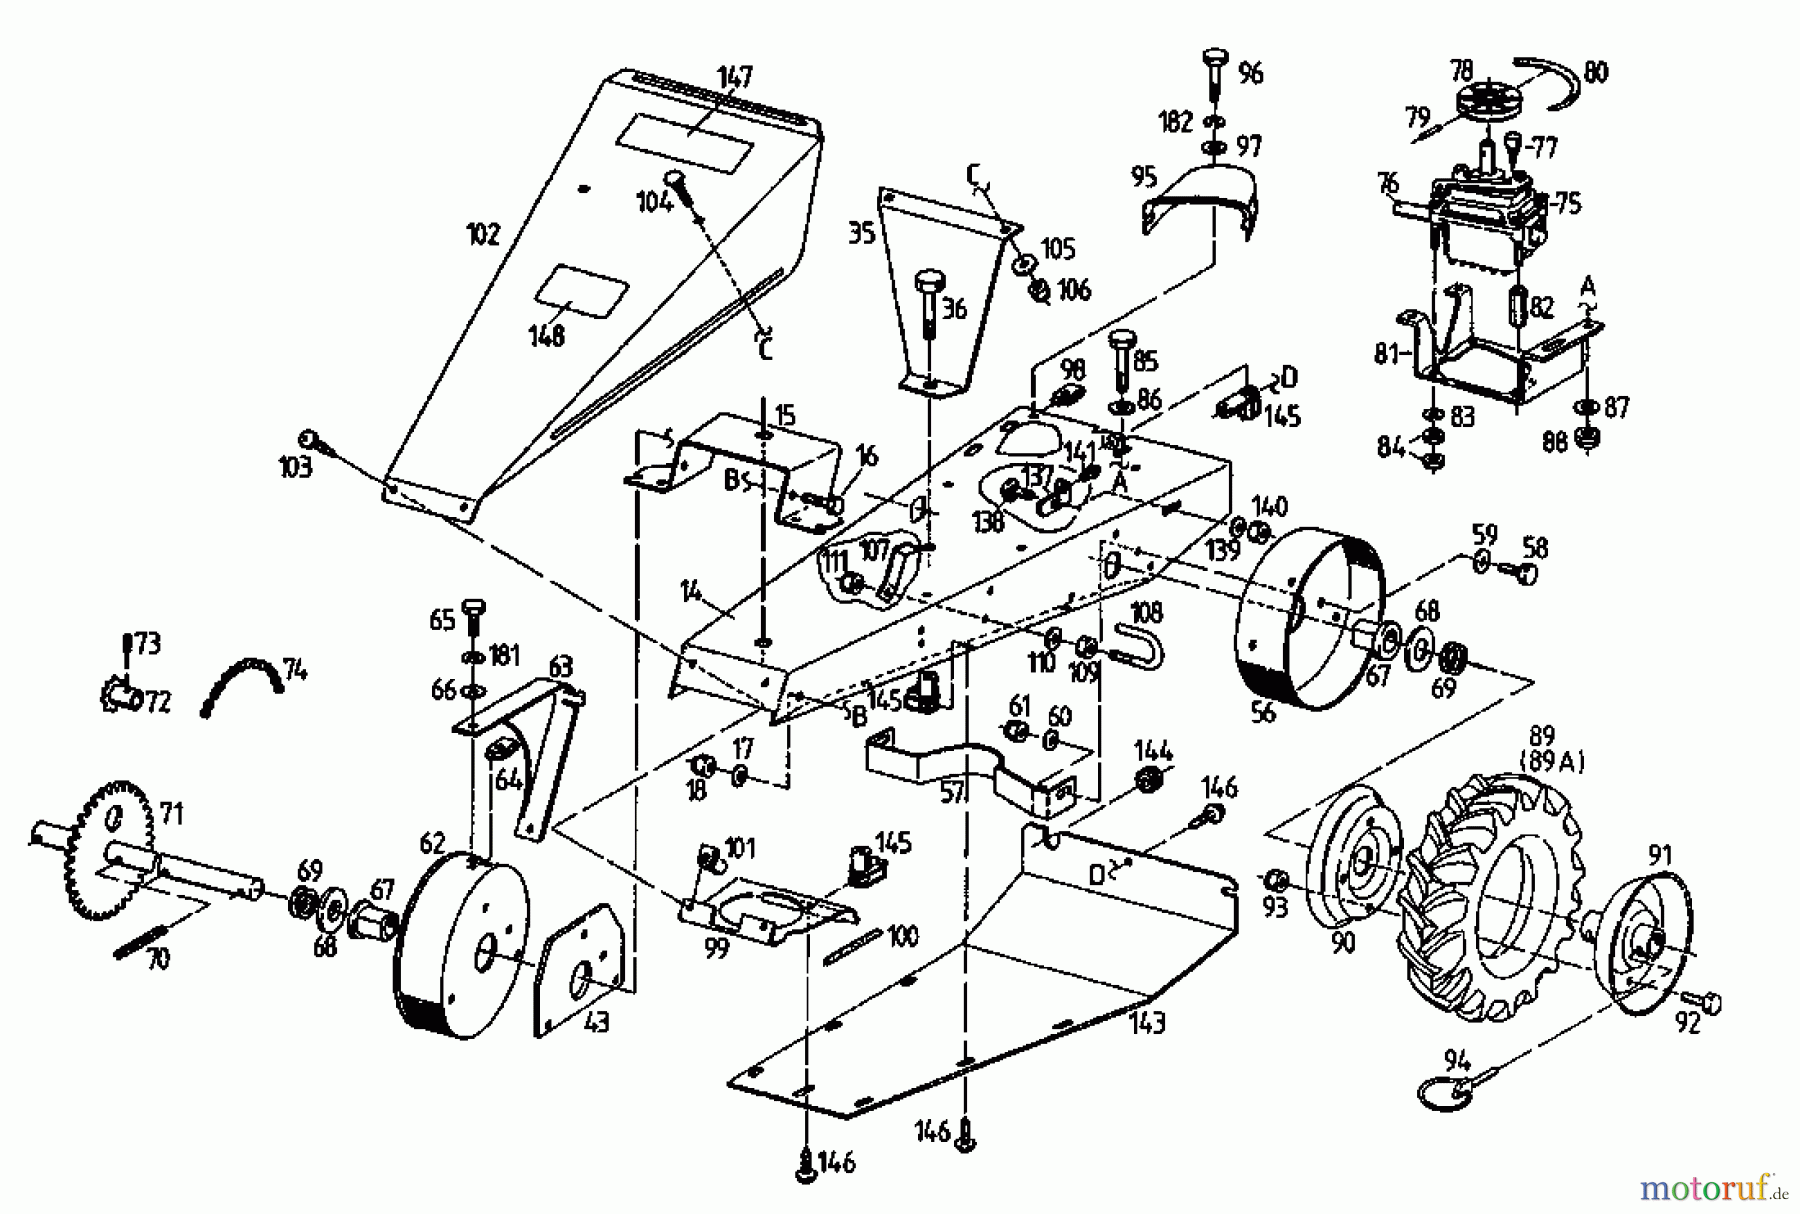  Gutbrod Cutter bar mower BM 700 07510.04  (1993) Drive system, Wheels